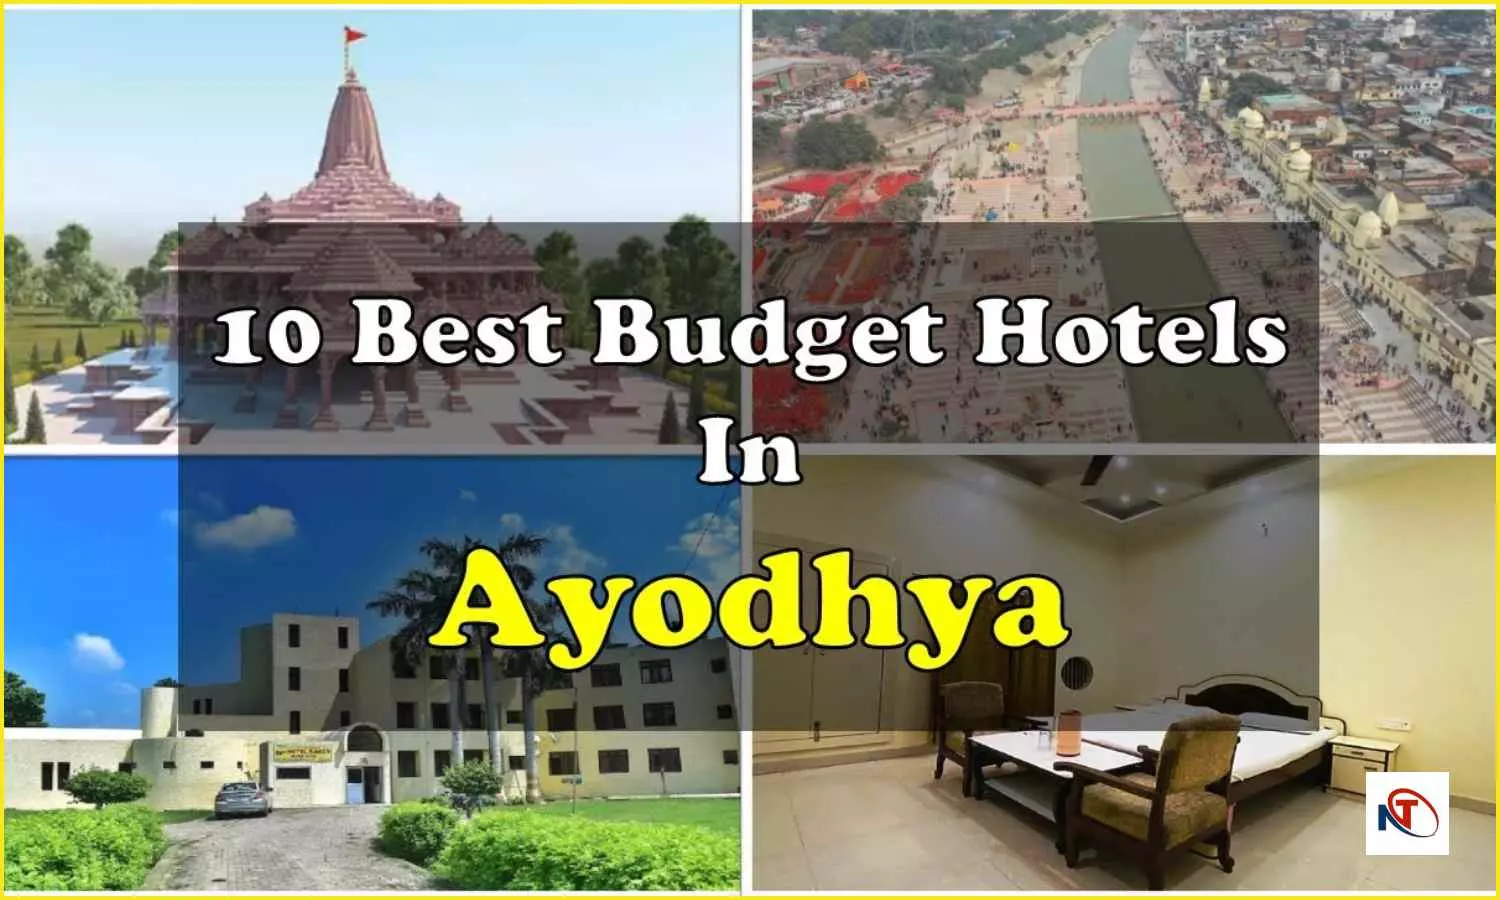 Ayodhya Budget Hotels